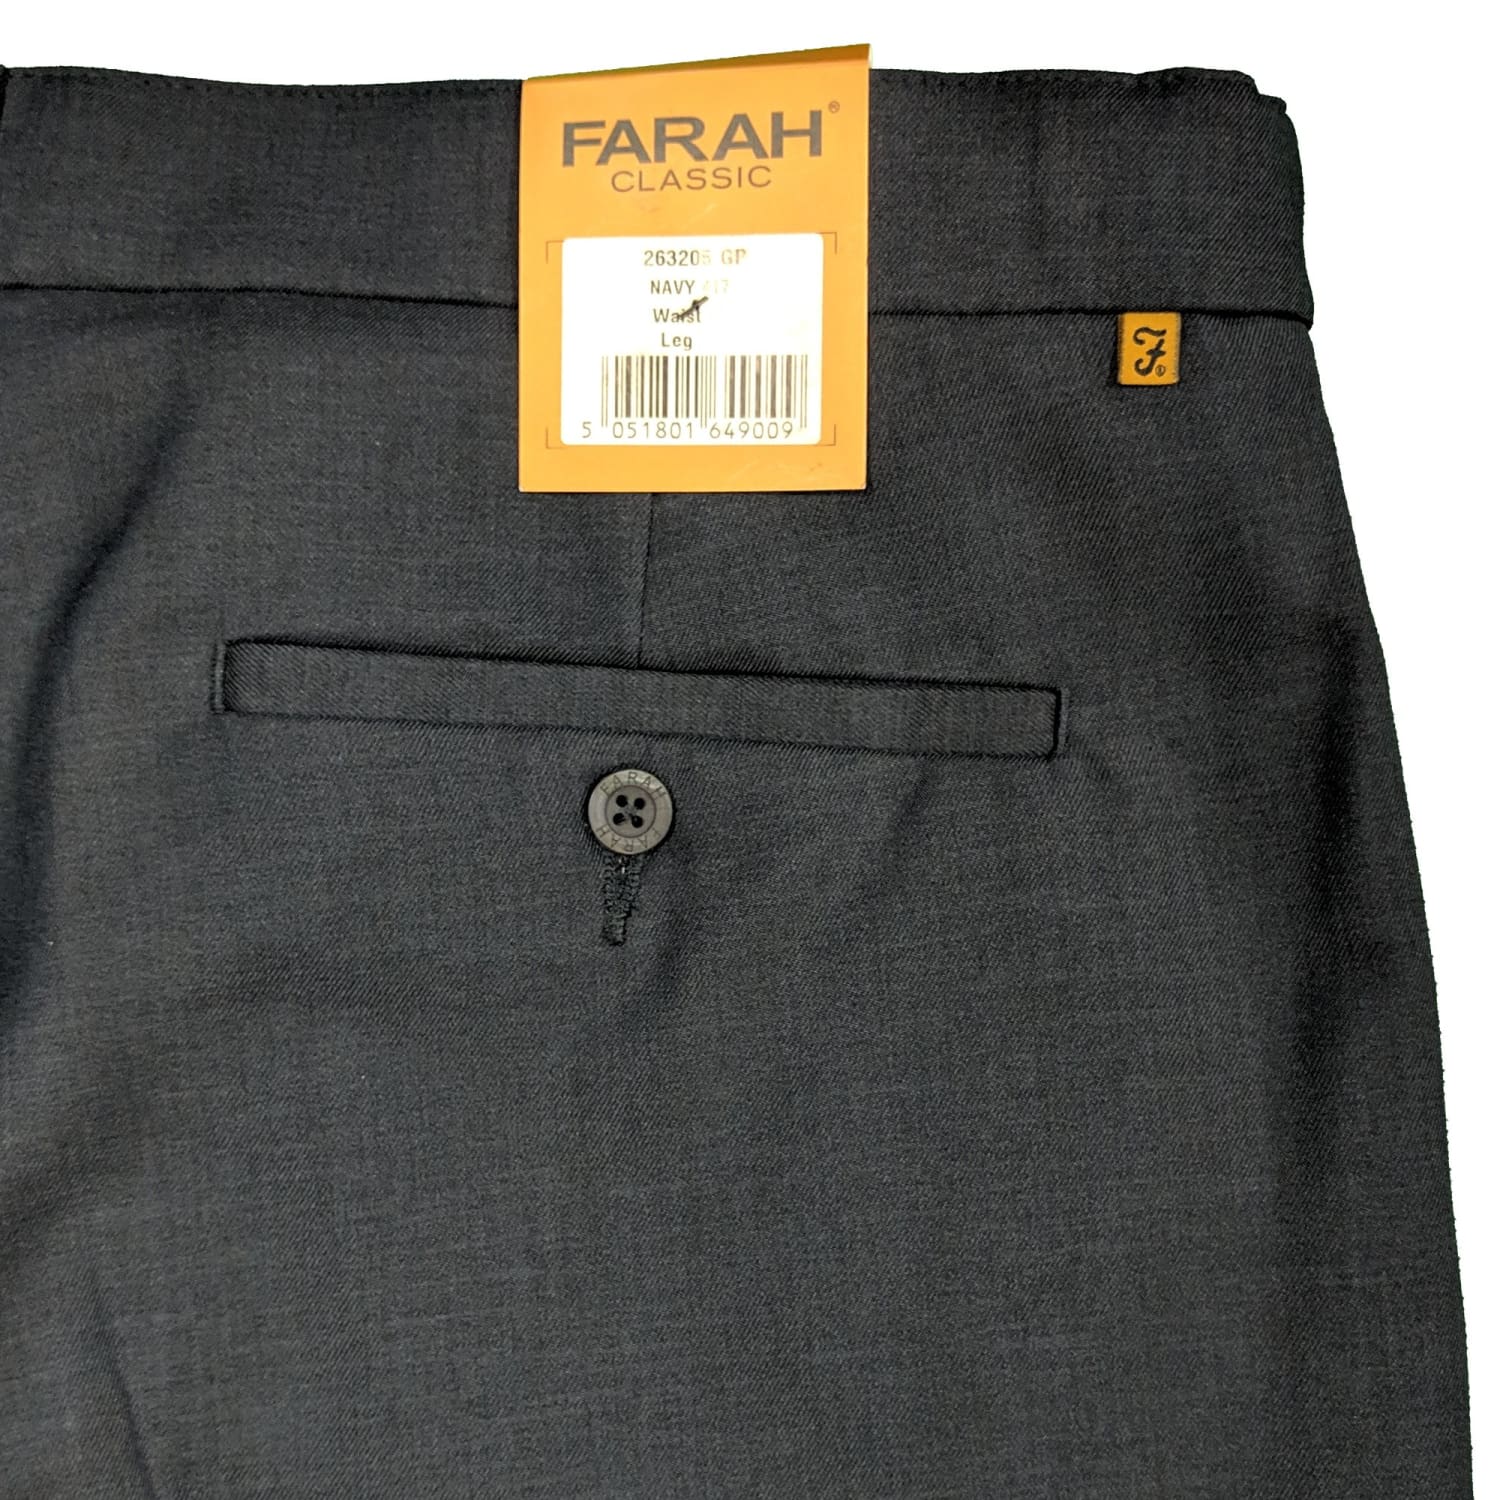 FARAH MEN'S TROUSERS Size W40 L32 / W46 L30 Navy Blue Pocket Zip Button NWT  F1 £14.99 - PicClick UK